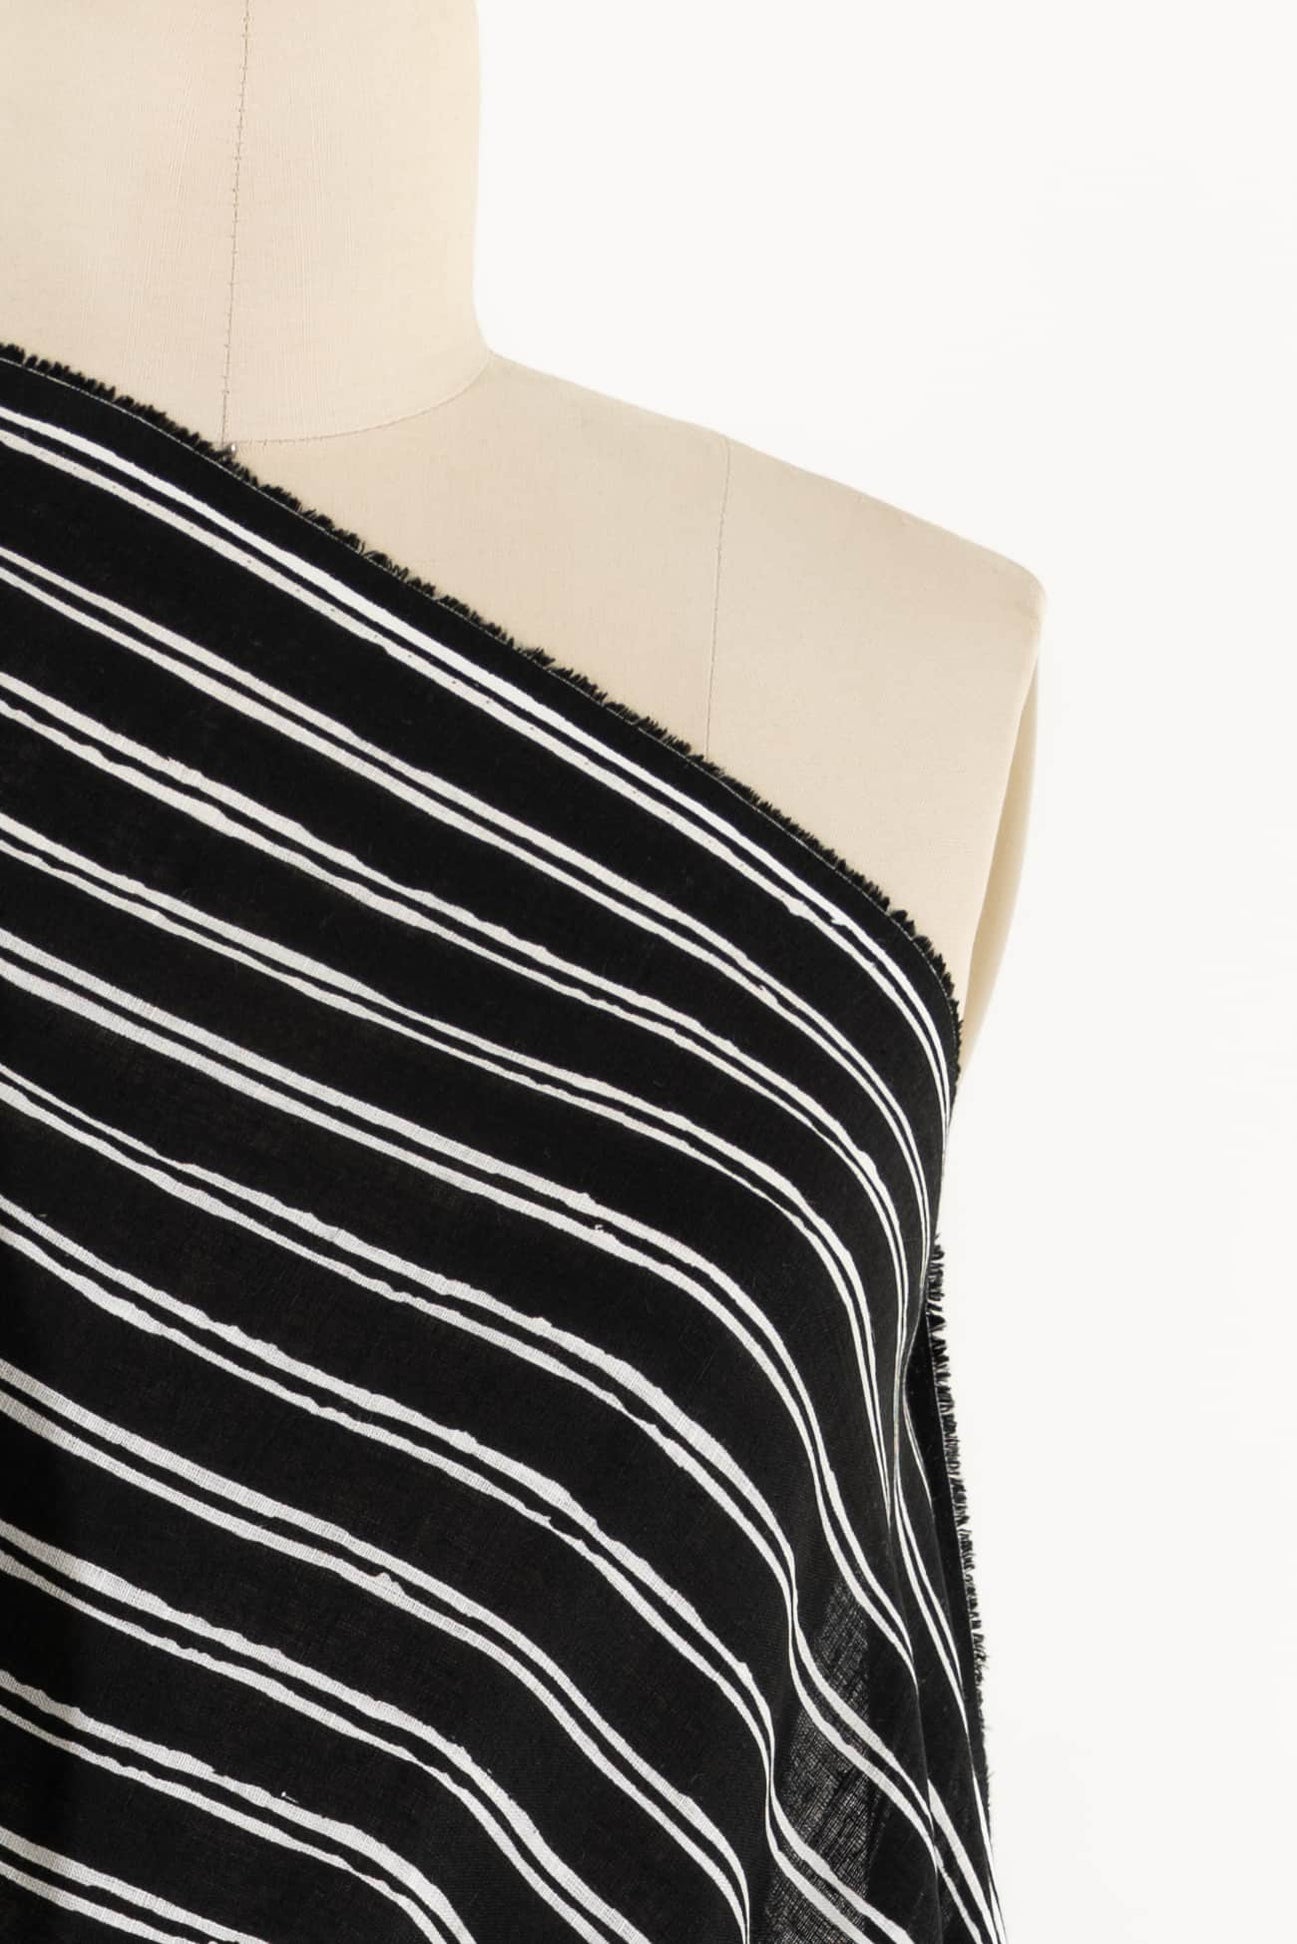 Designer Linen Fabrics– Marcy Tilton Fabrics